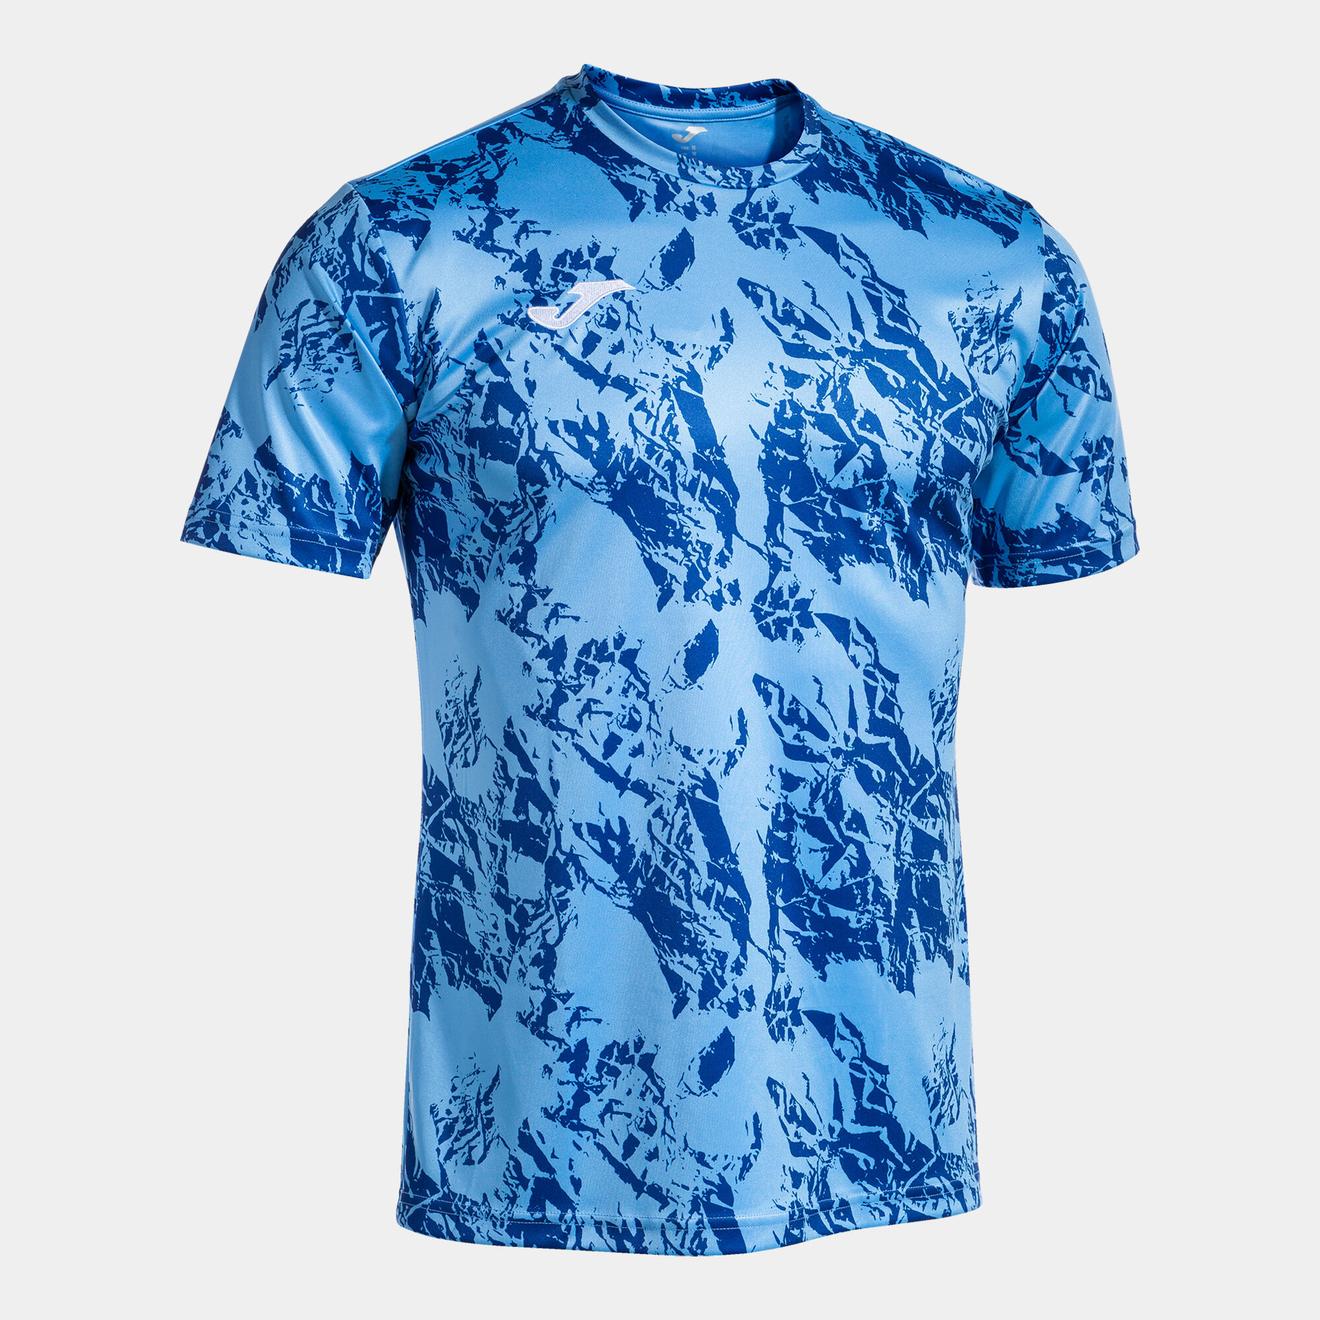 Oferta de Camiseta manga corta hombre Lion celeste azul por $11,36 en Joma